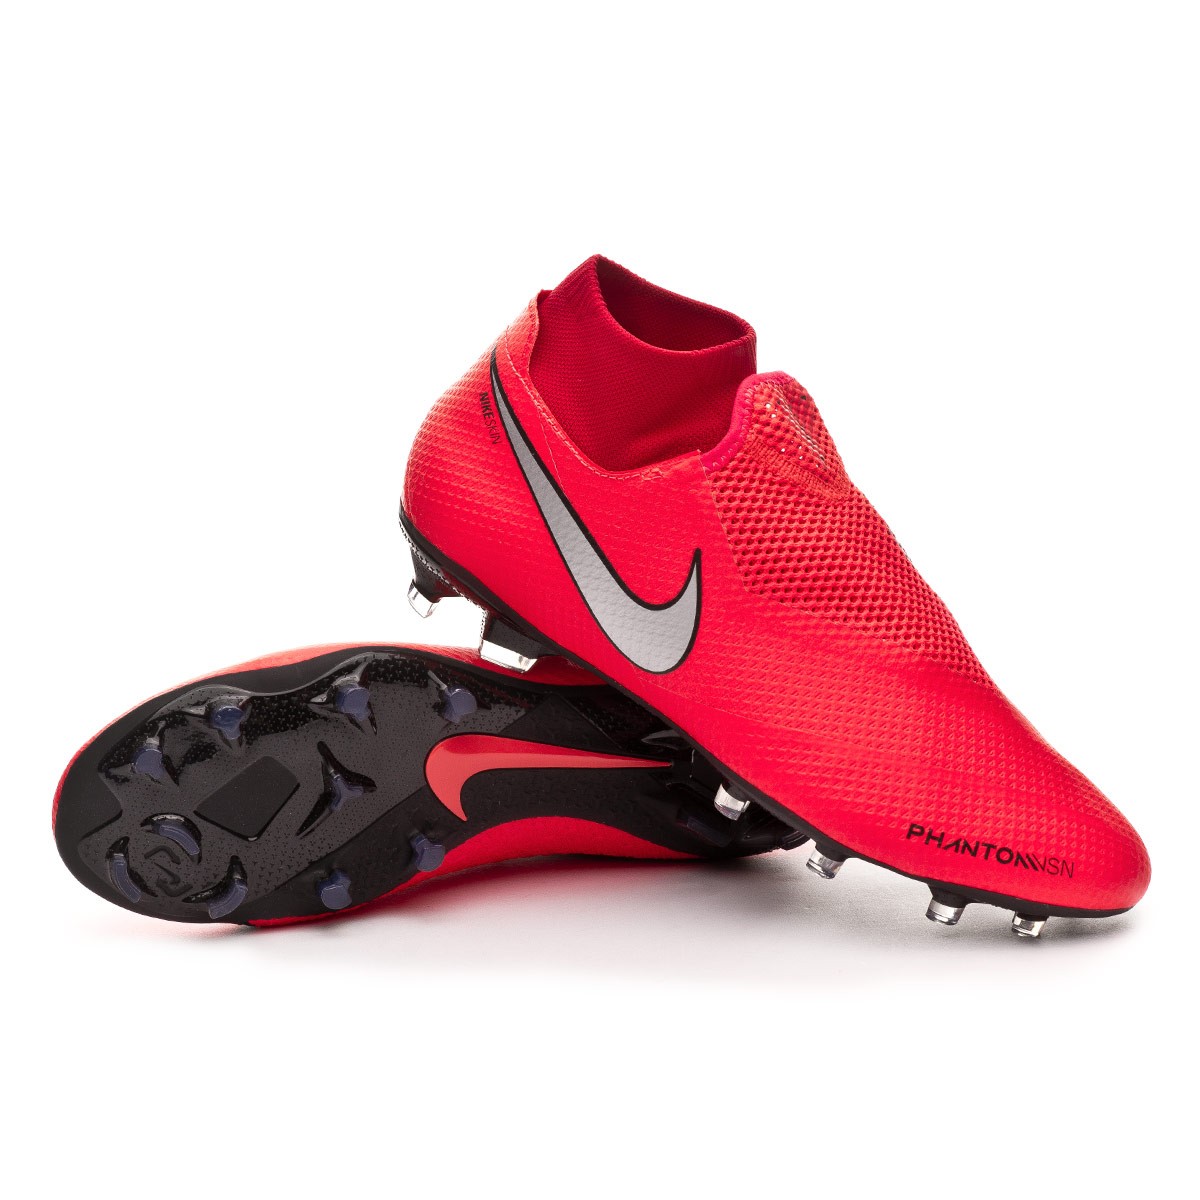 Football Boots Nike Phantom Vision Pro DF FG Bright crimson-Metallic silver  - Football store Fútbol Emotion